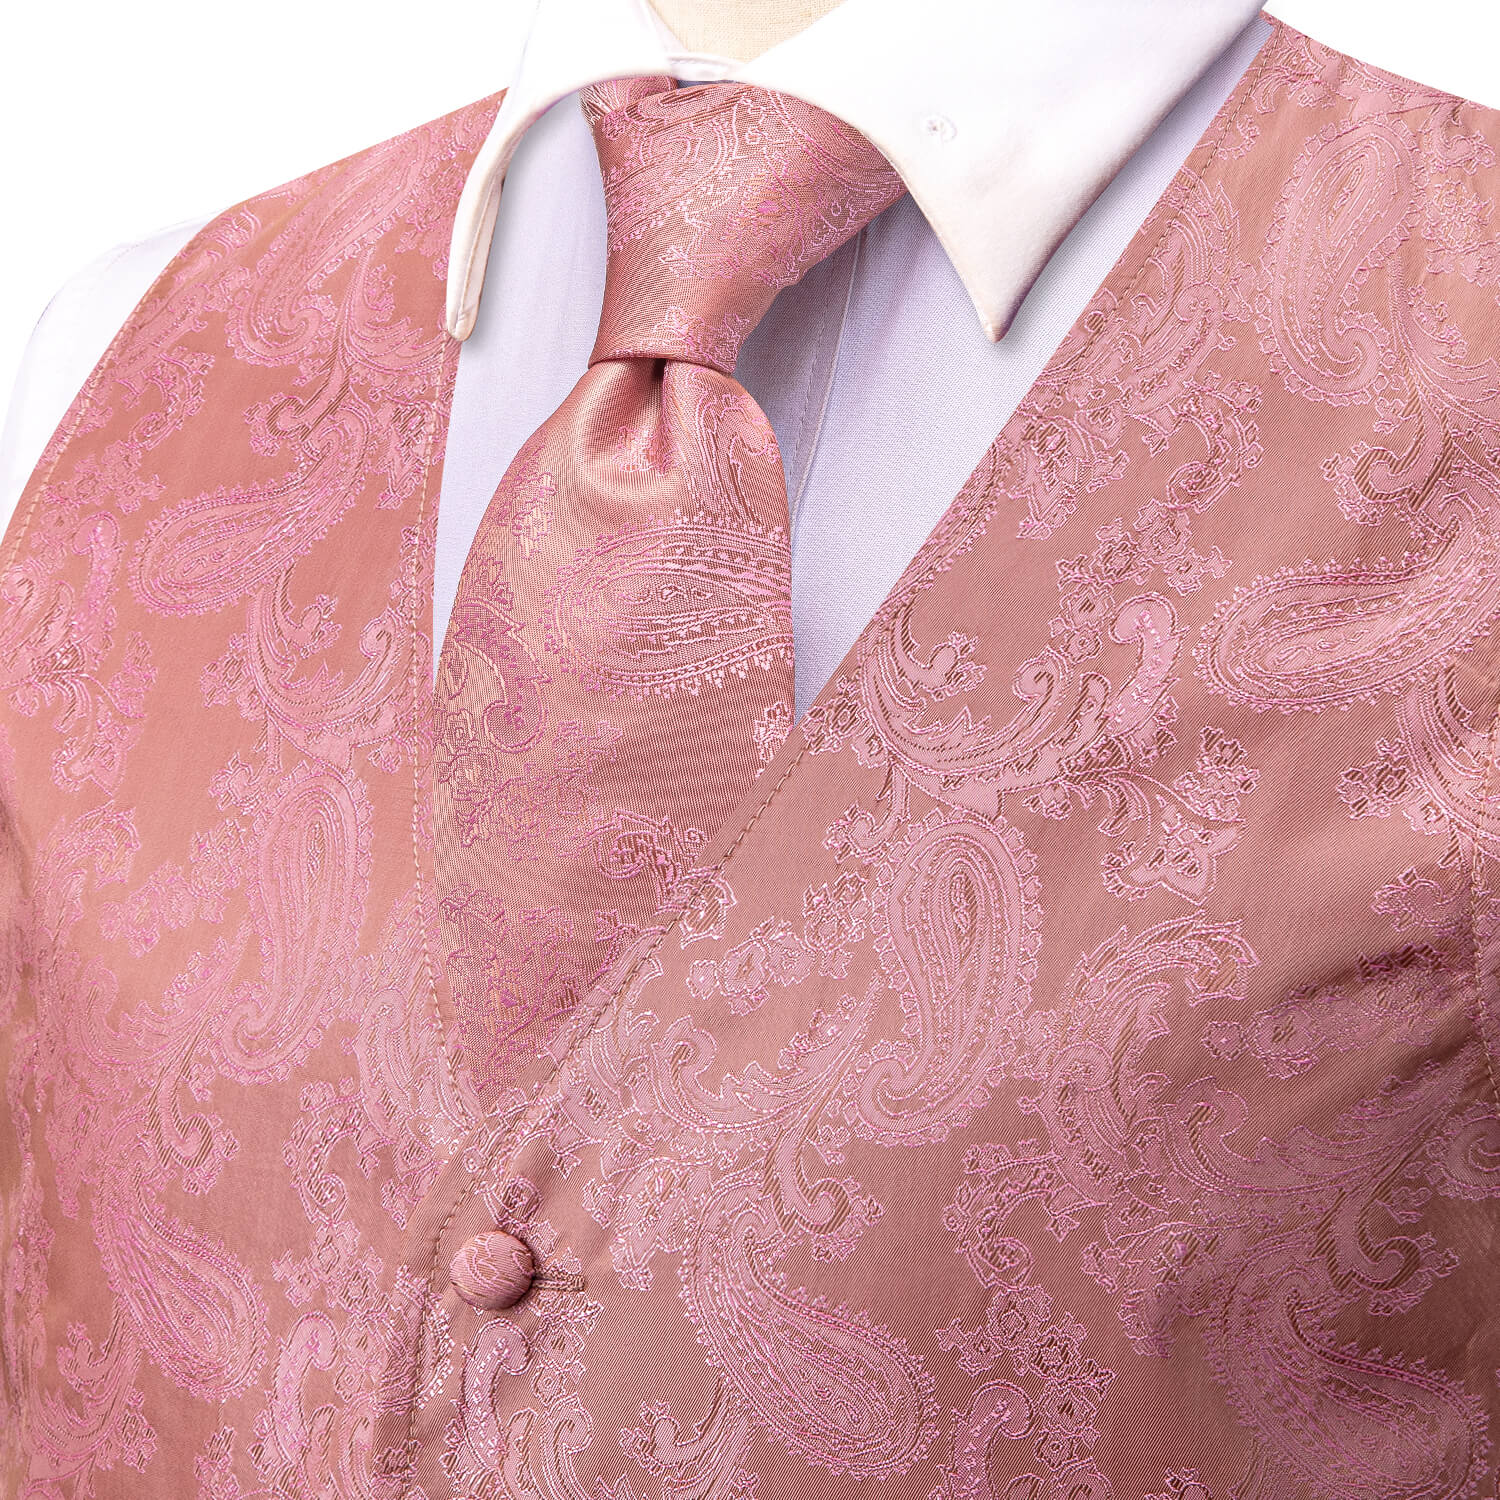 Rose Pink Jacquard Paisley Mens Vest and Tie Set